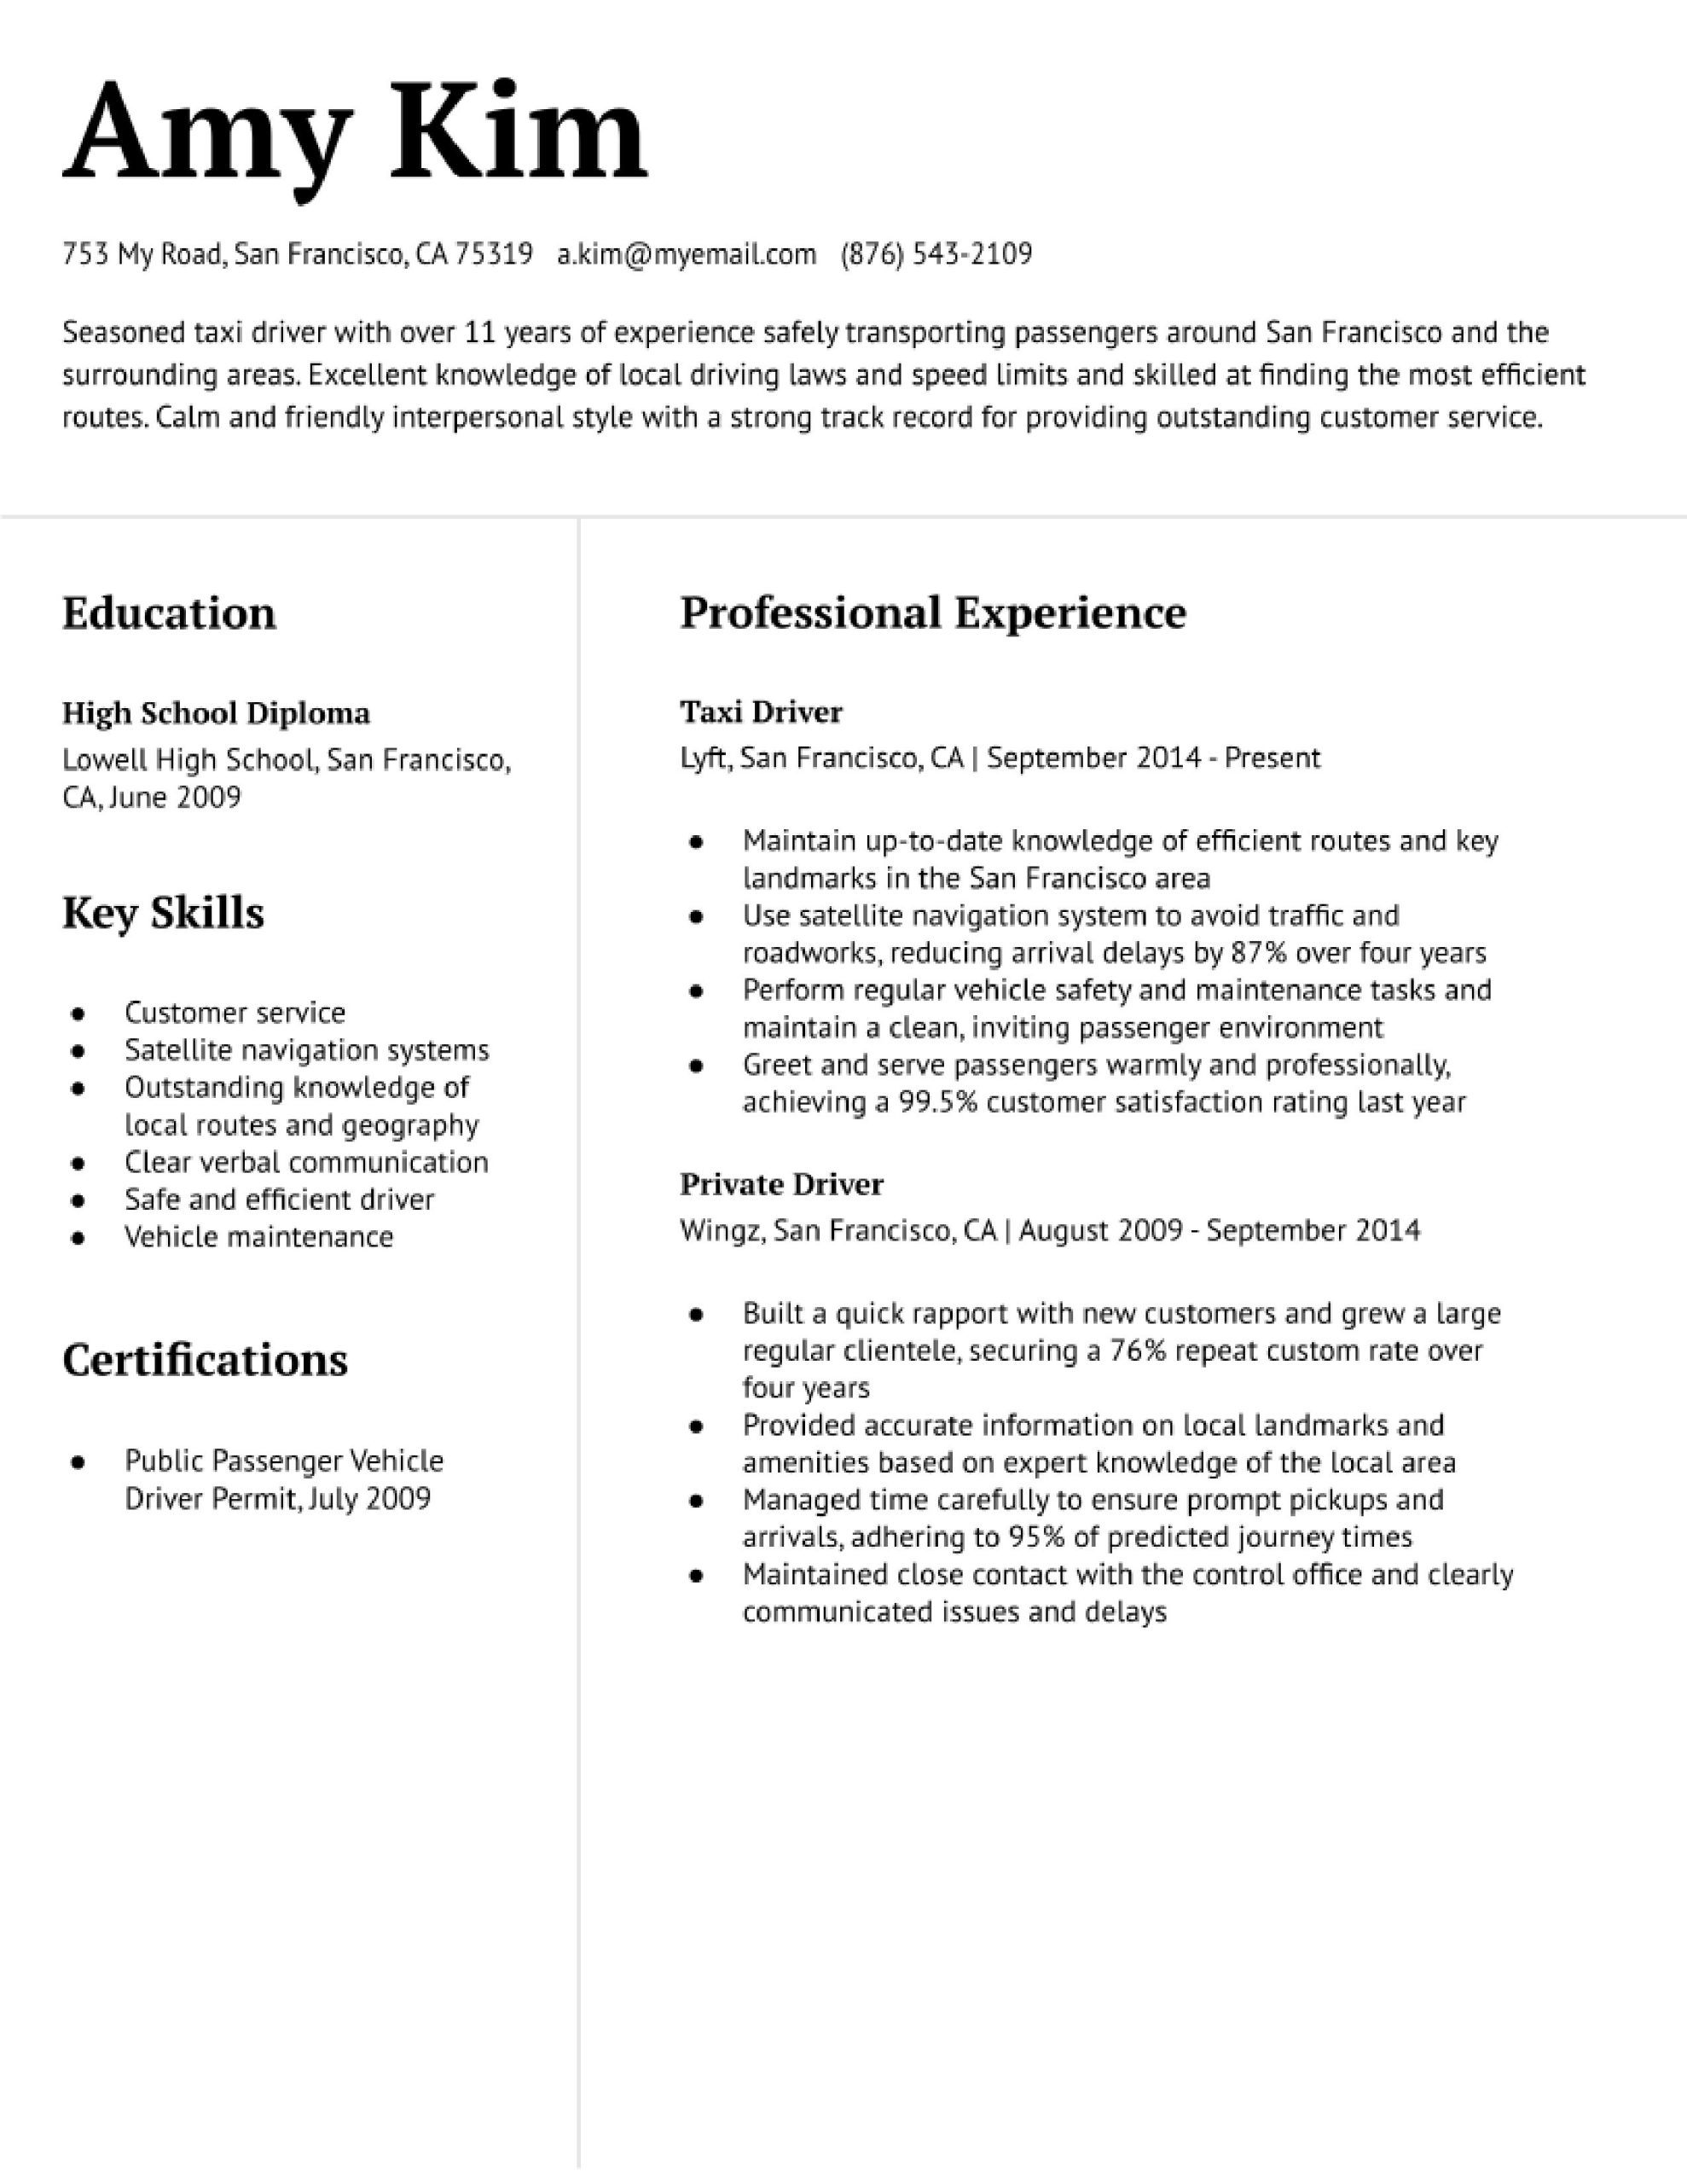 Sample Resume for Van Driver for Retirement Community Uber Driver Resume Examples In 2022 – Resumebuilder.com